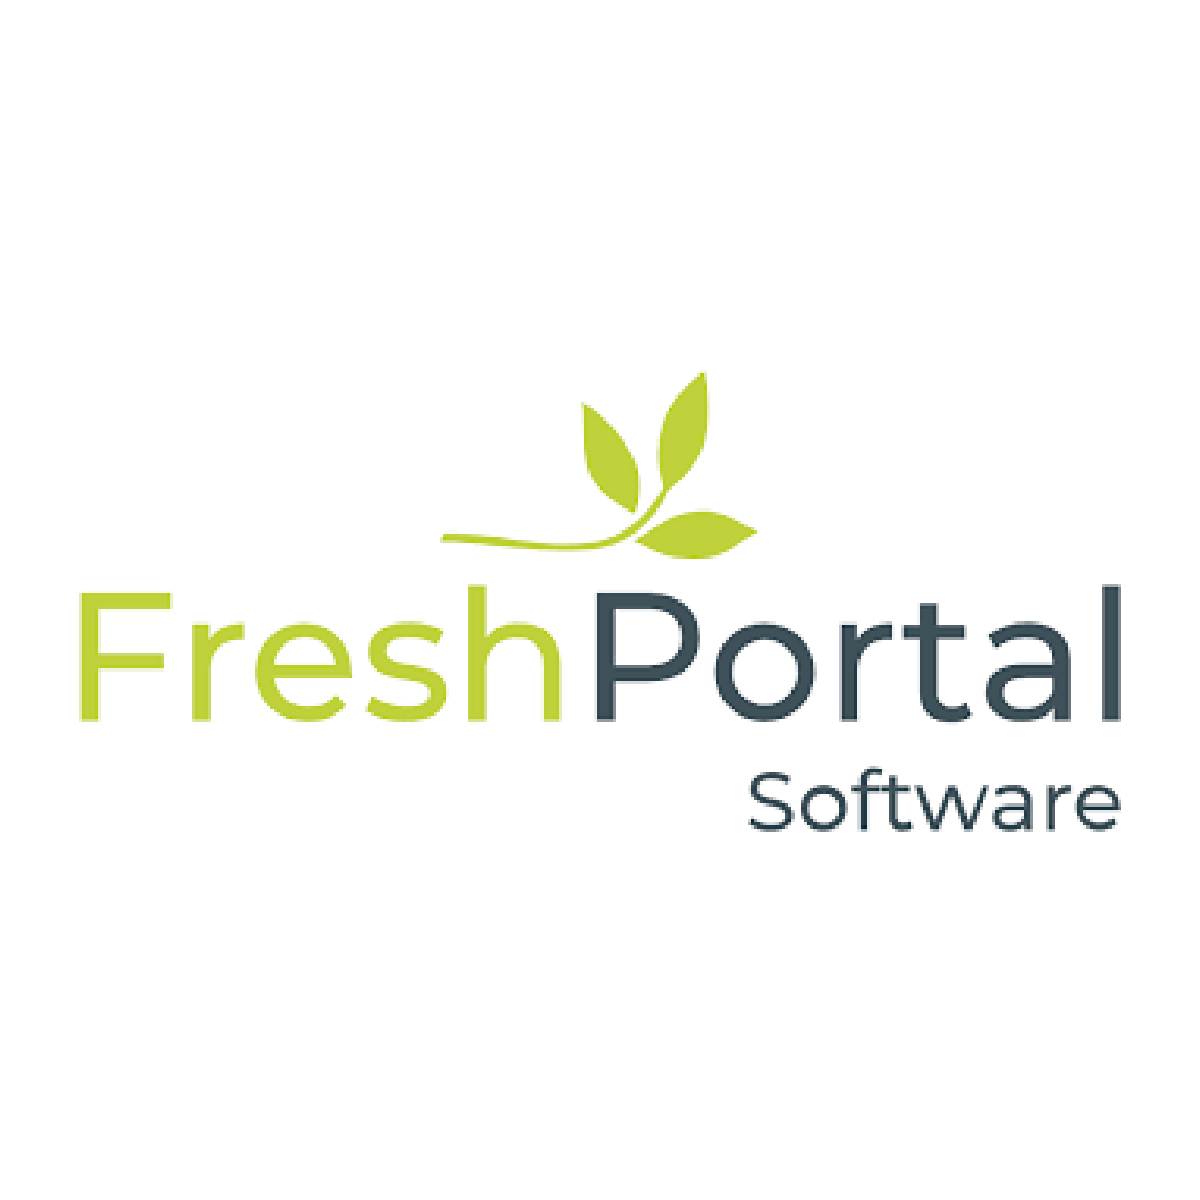 Fresh Portal